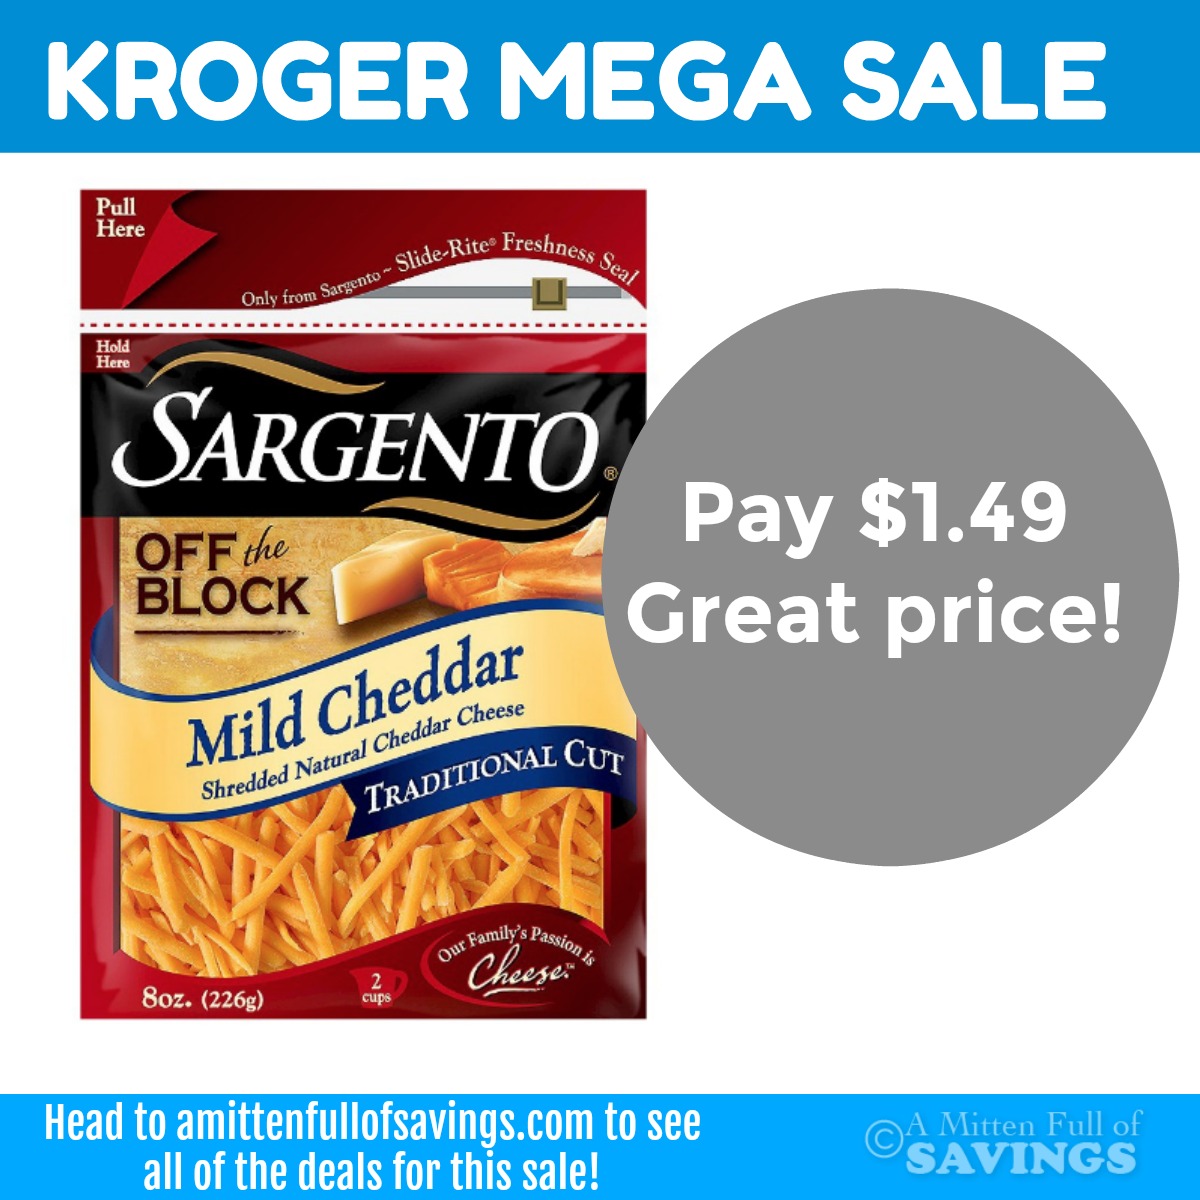 Kroger MEGA sale on Sargento Cheese